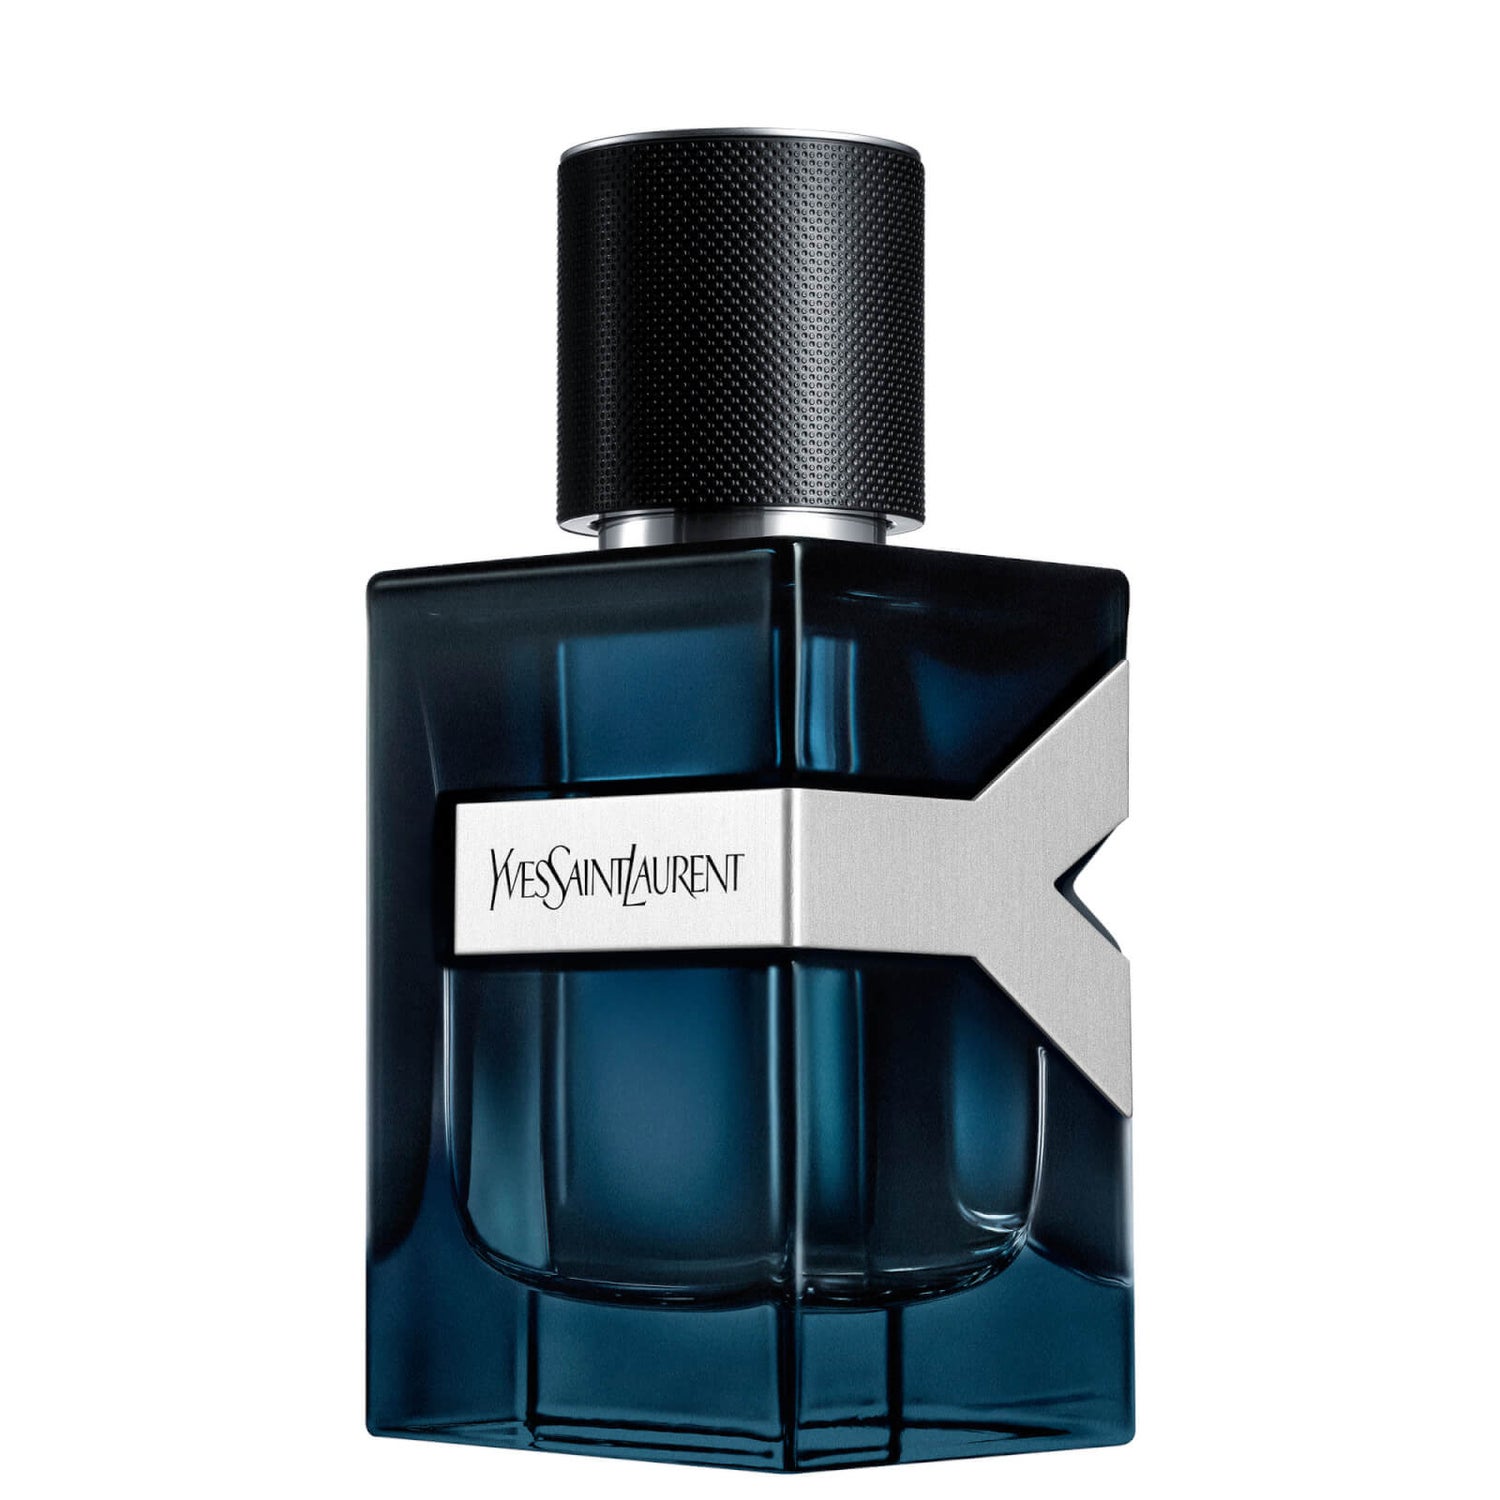 Yves Saint Laurent Y Eau de Parfum Intense 60ml - LOOKFANTASTIC